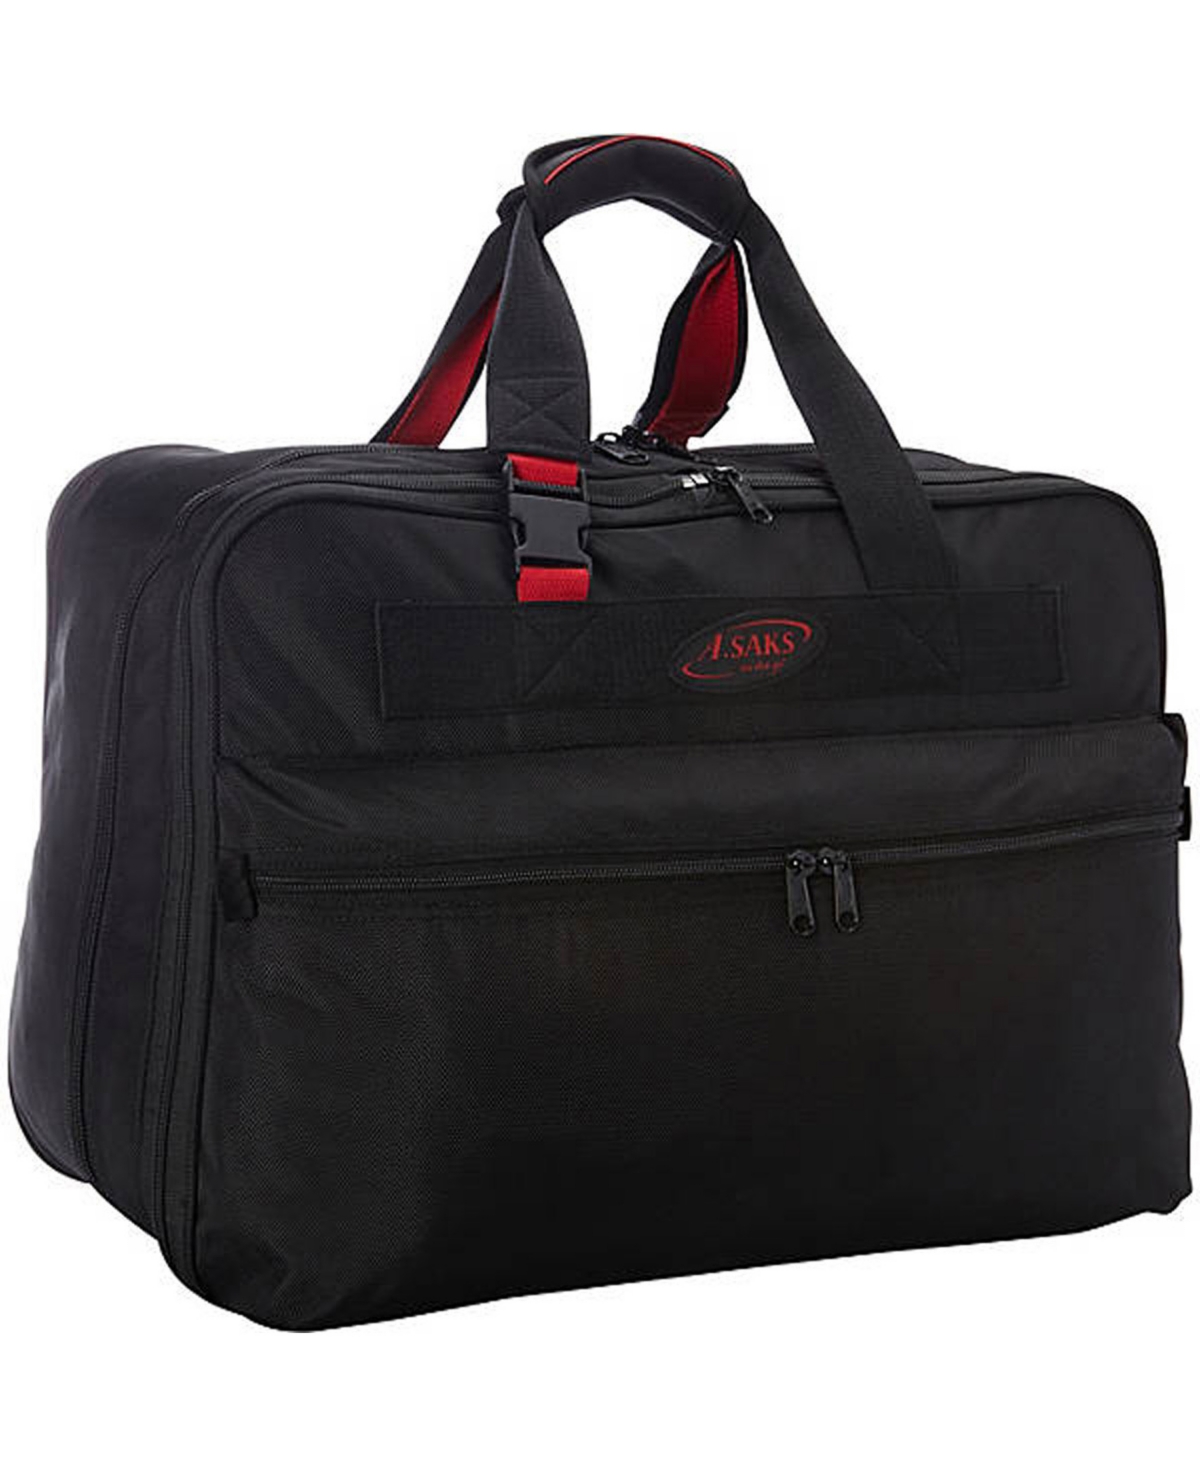 21" Expandable Soft Carry on Suitcase - Black